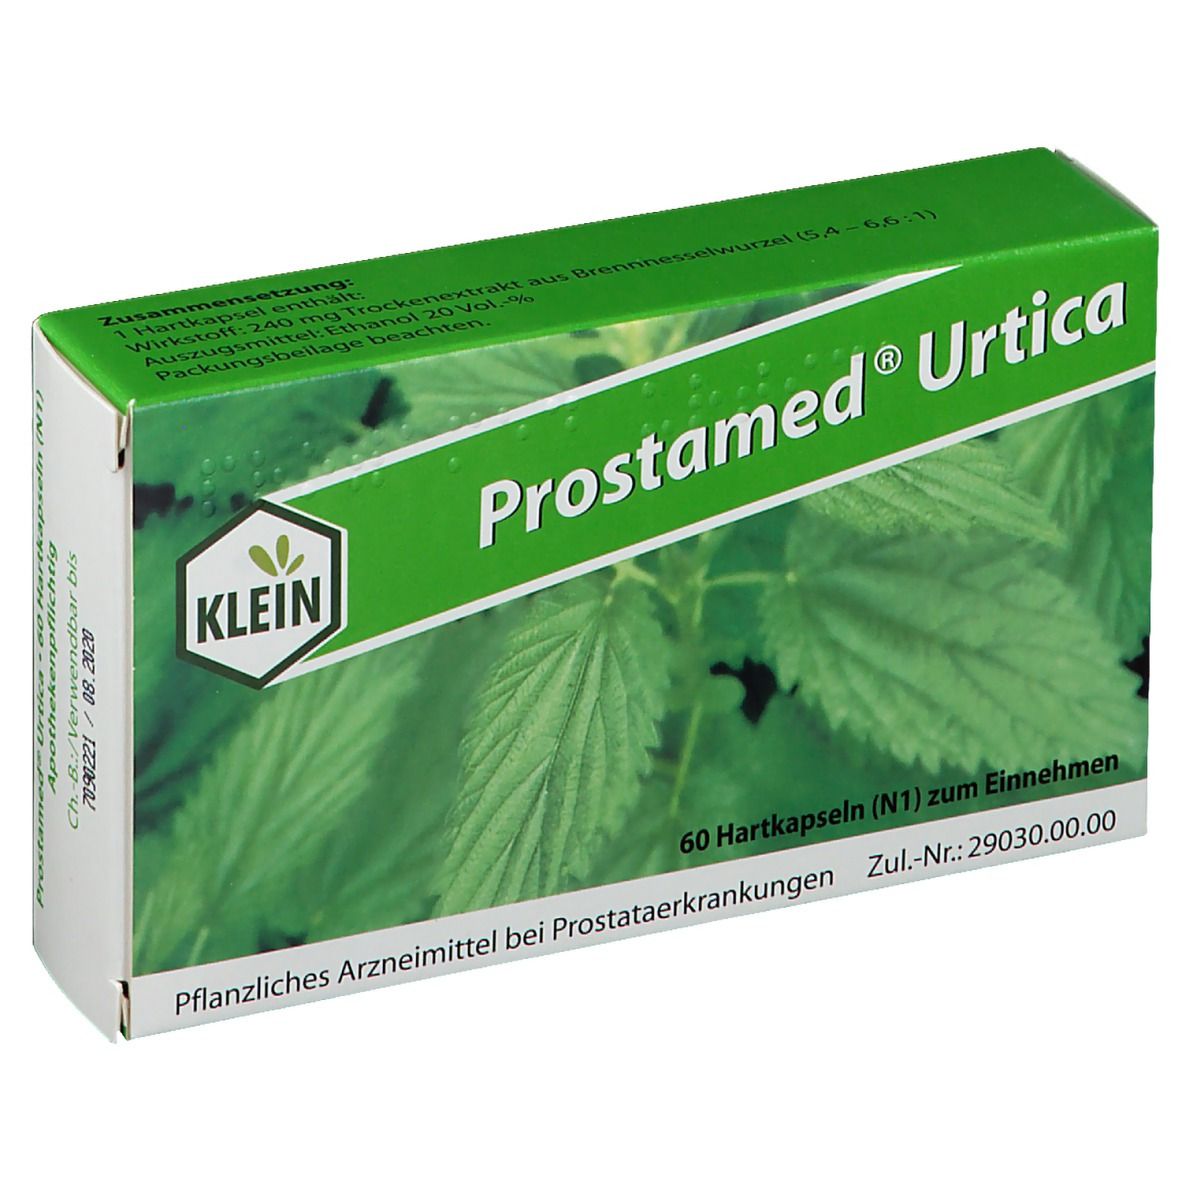 Prostamed® Urtica Kapseln